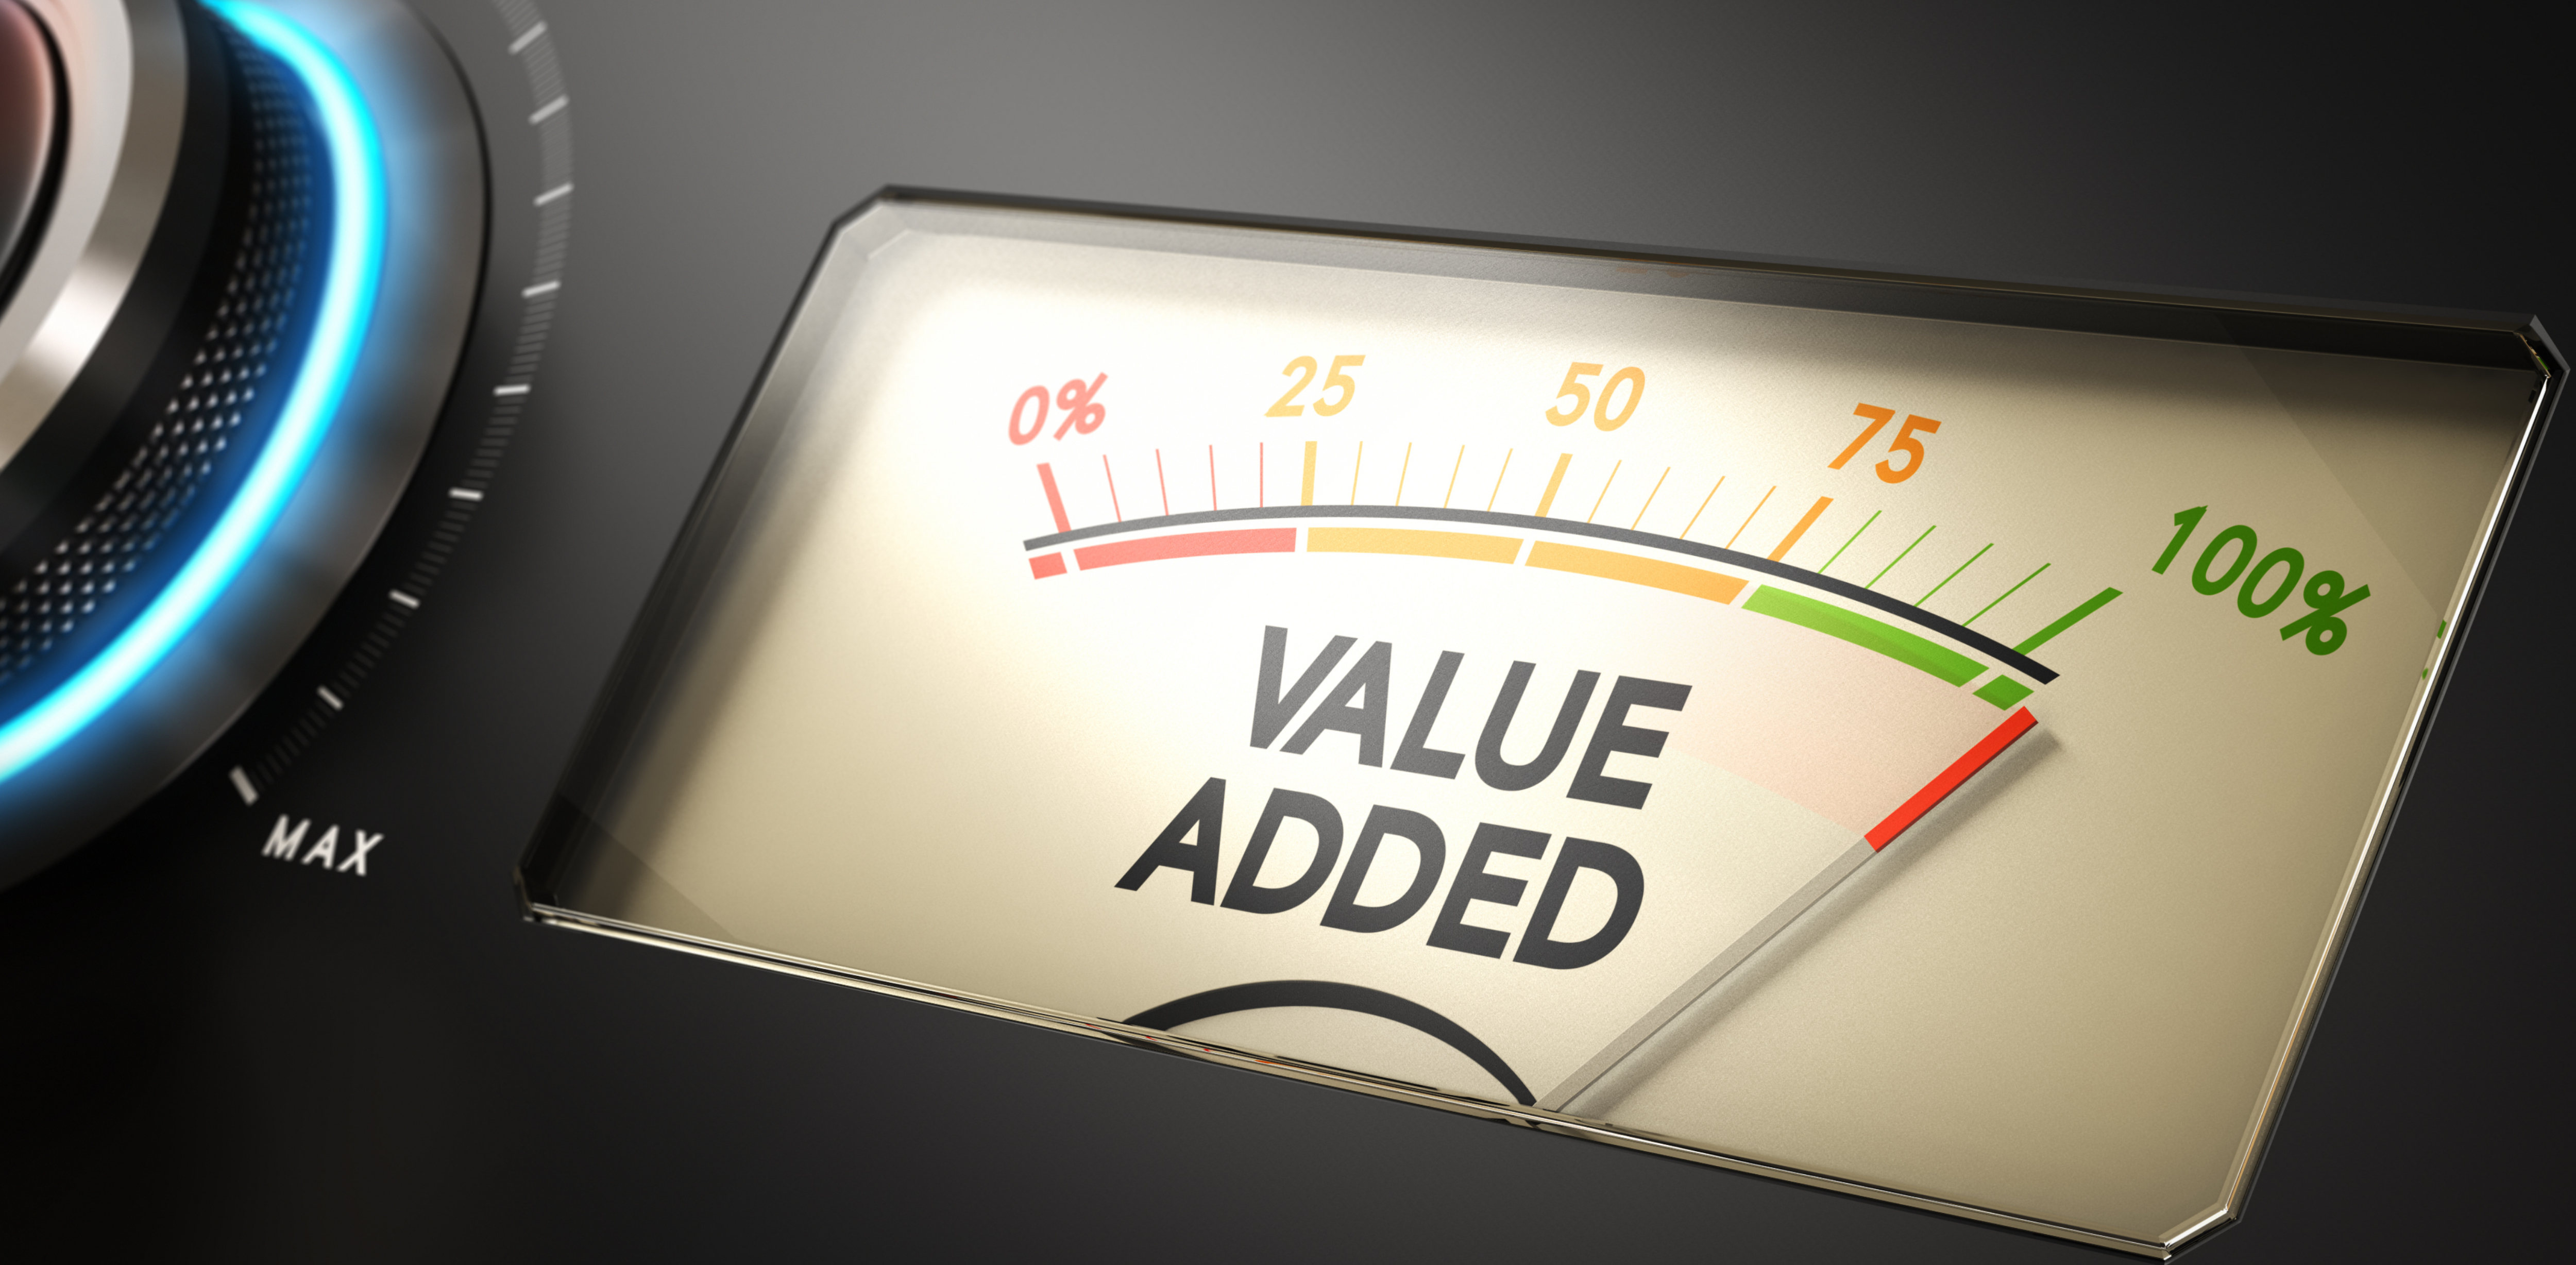 Jeff Woods: Appreciating where advisers add value